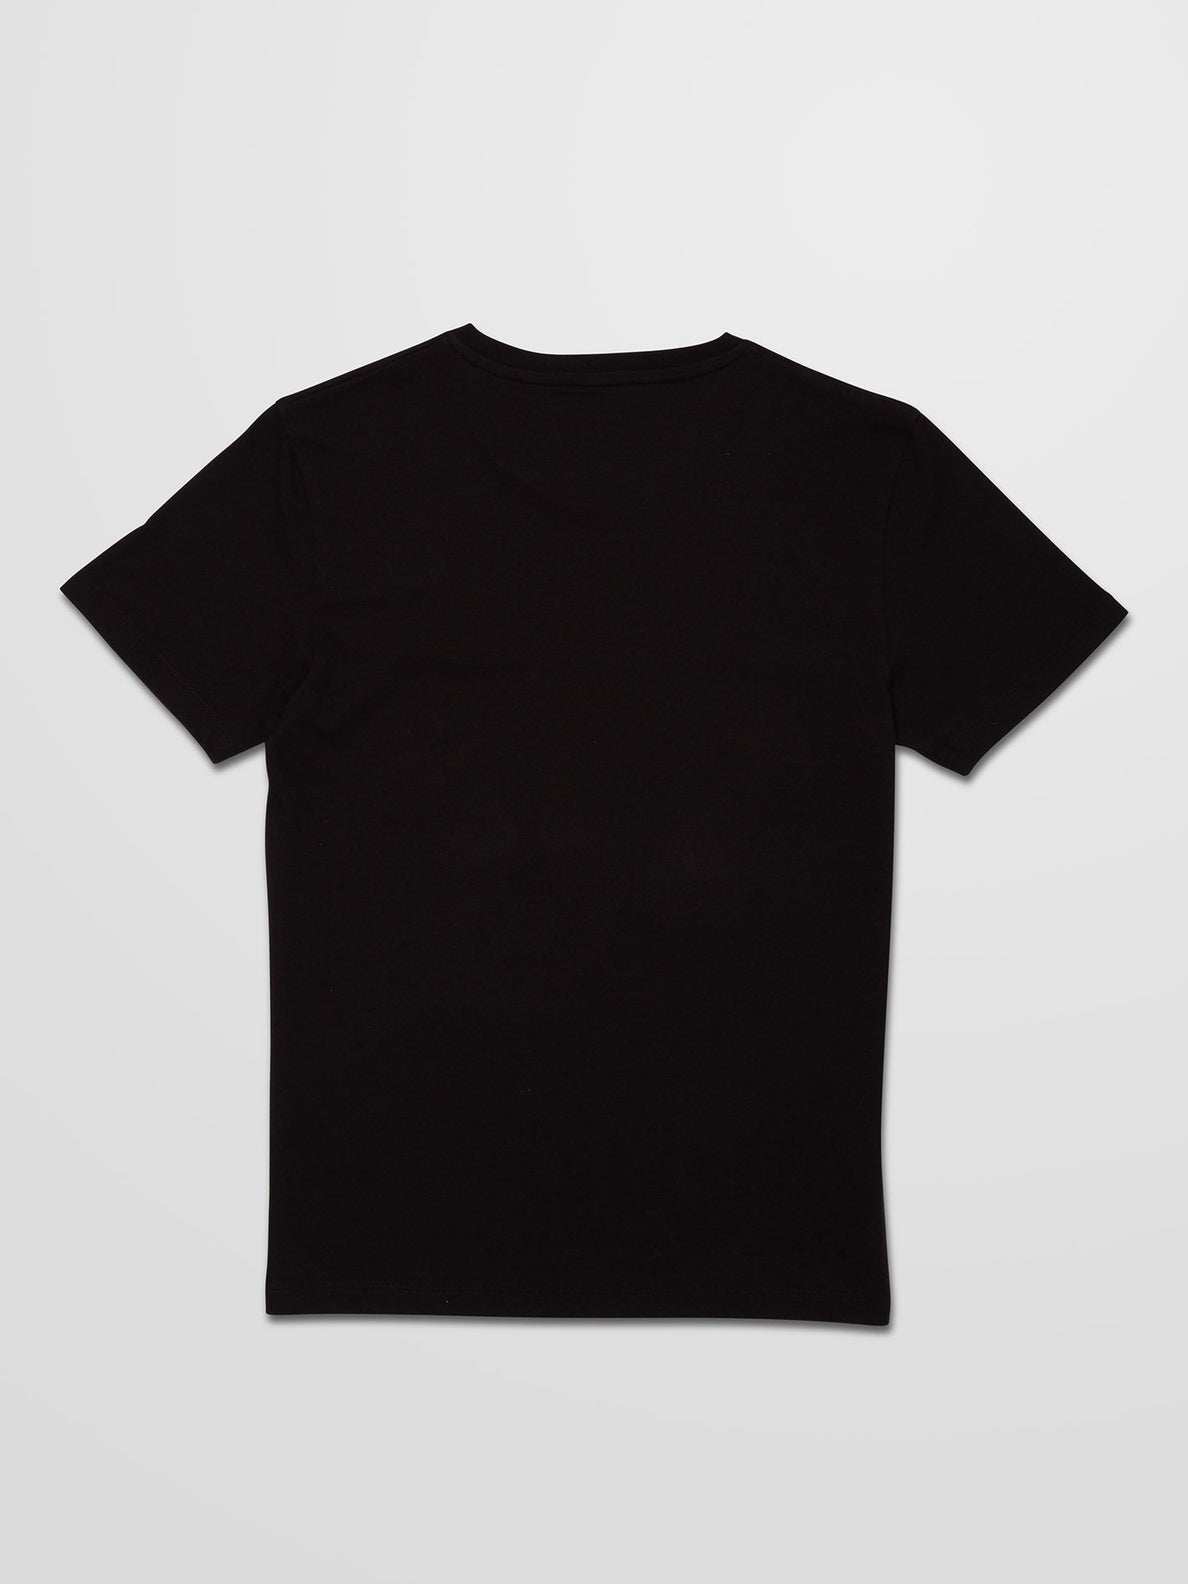 M. Loeffler T-shirt - BLACK - (BOYS) (C5232100_BLK) [B]